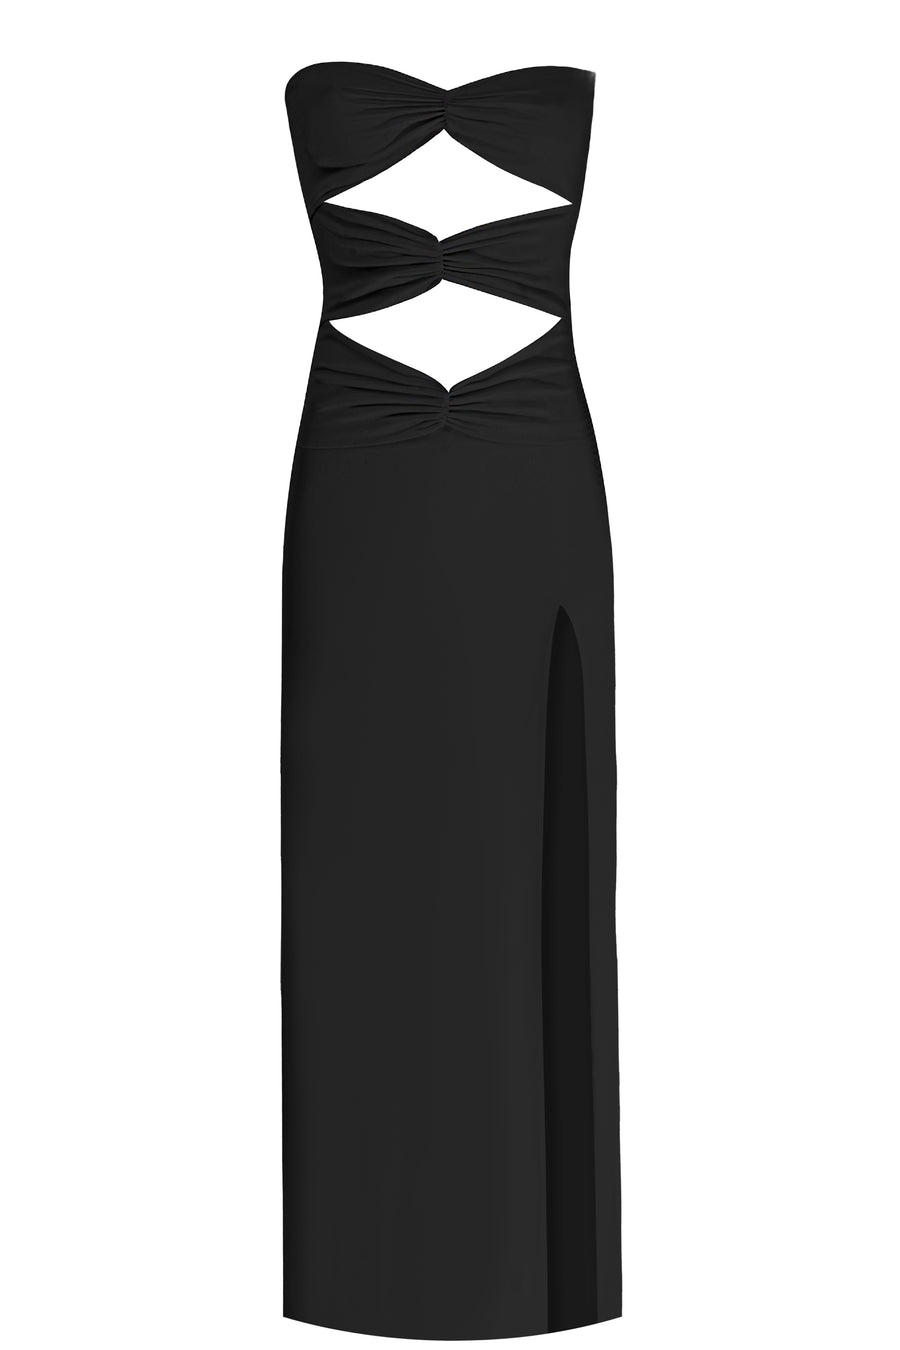 The Darlene Black Midi Dress